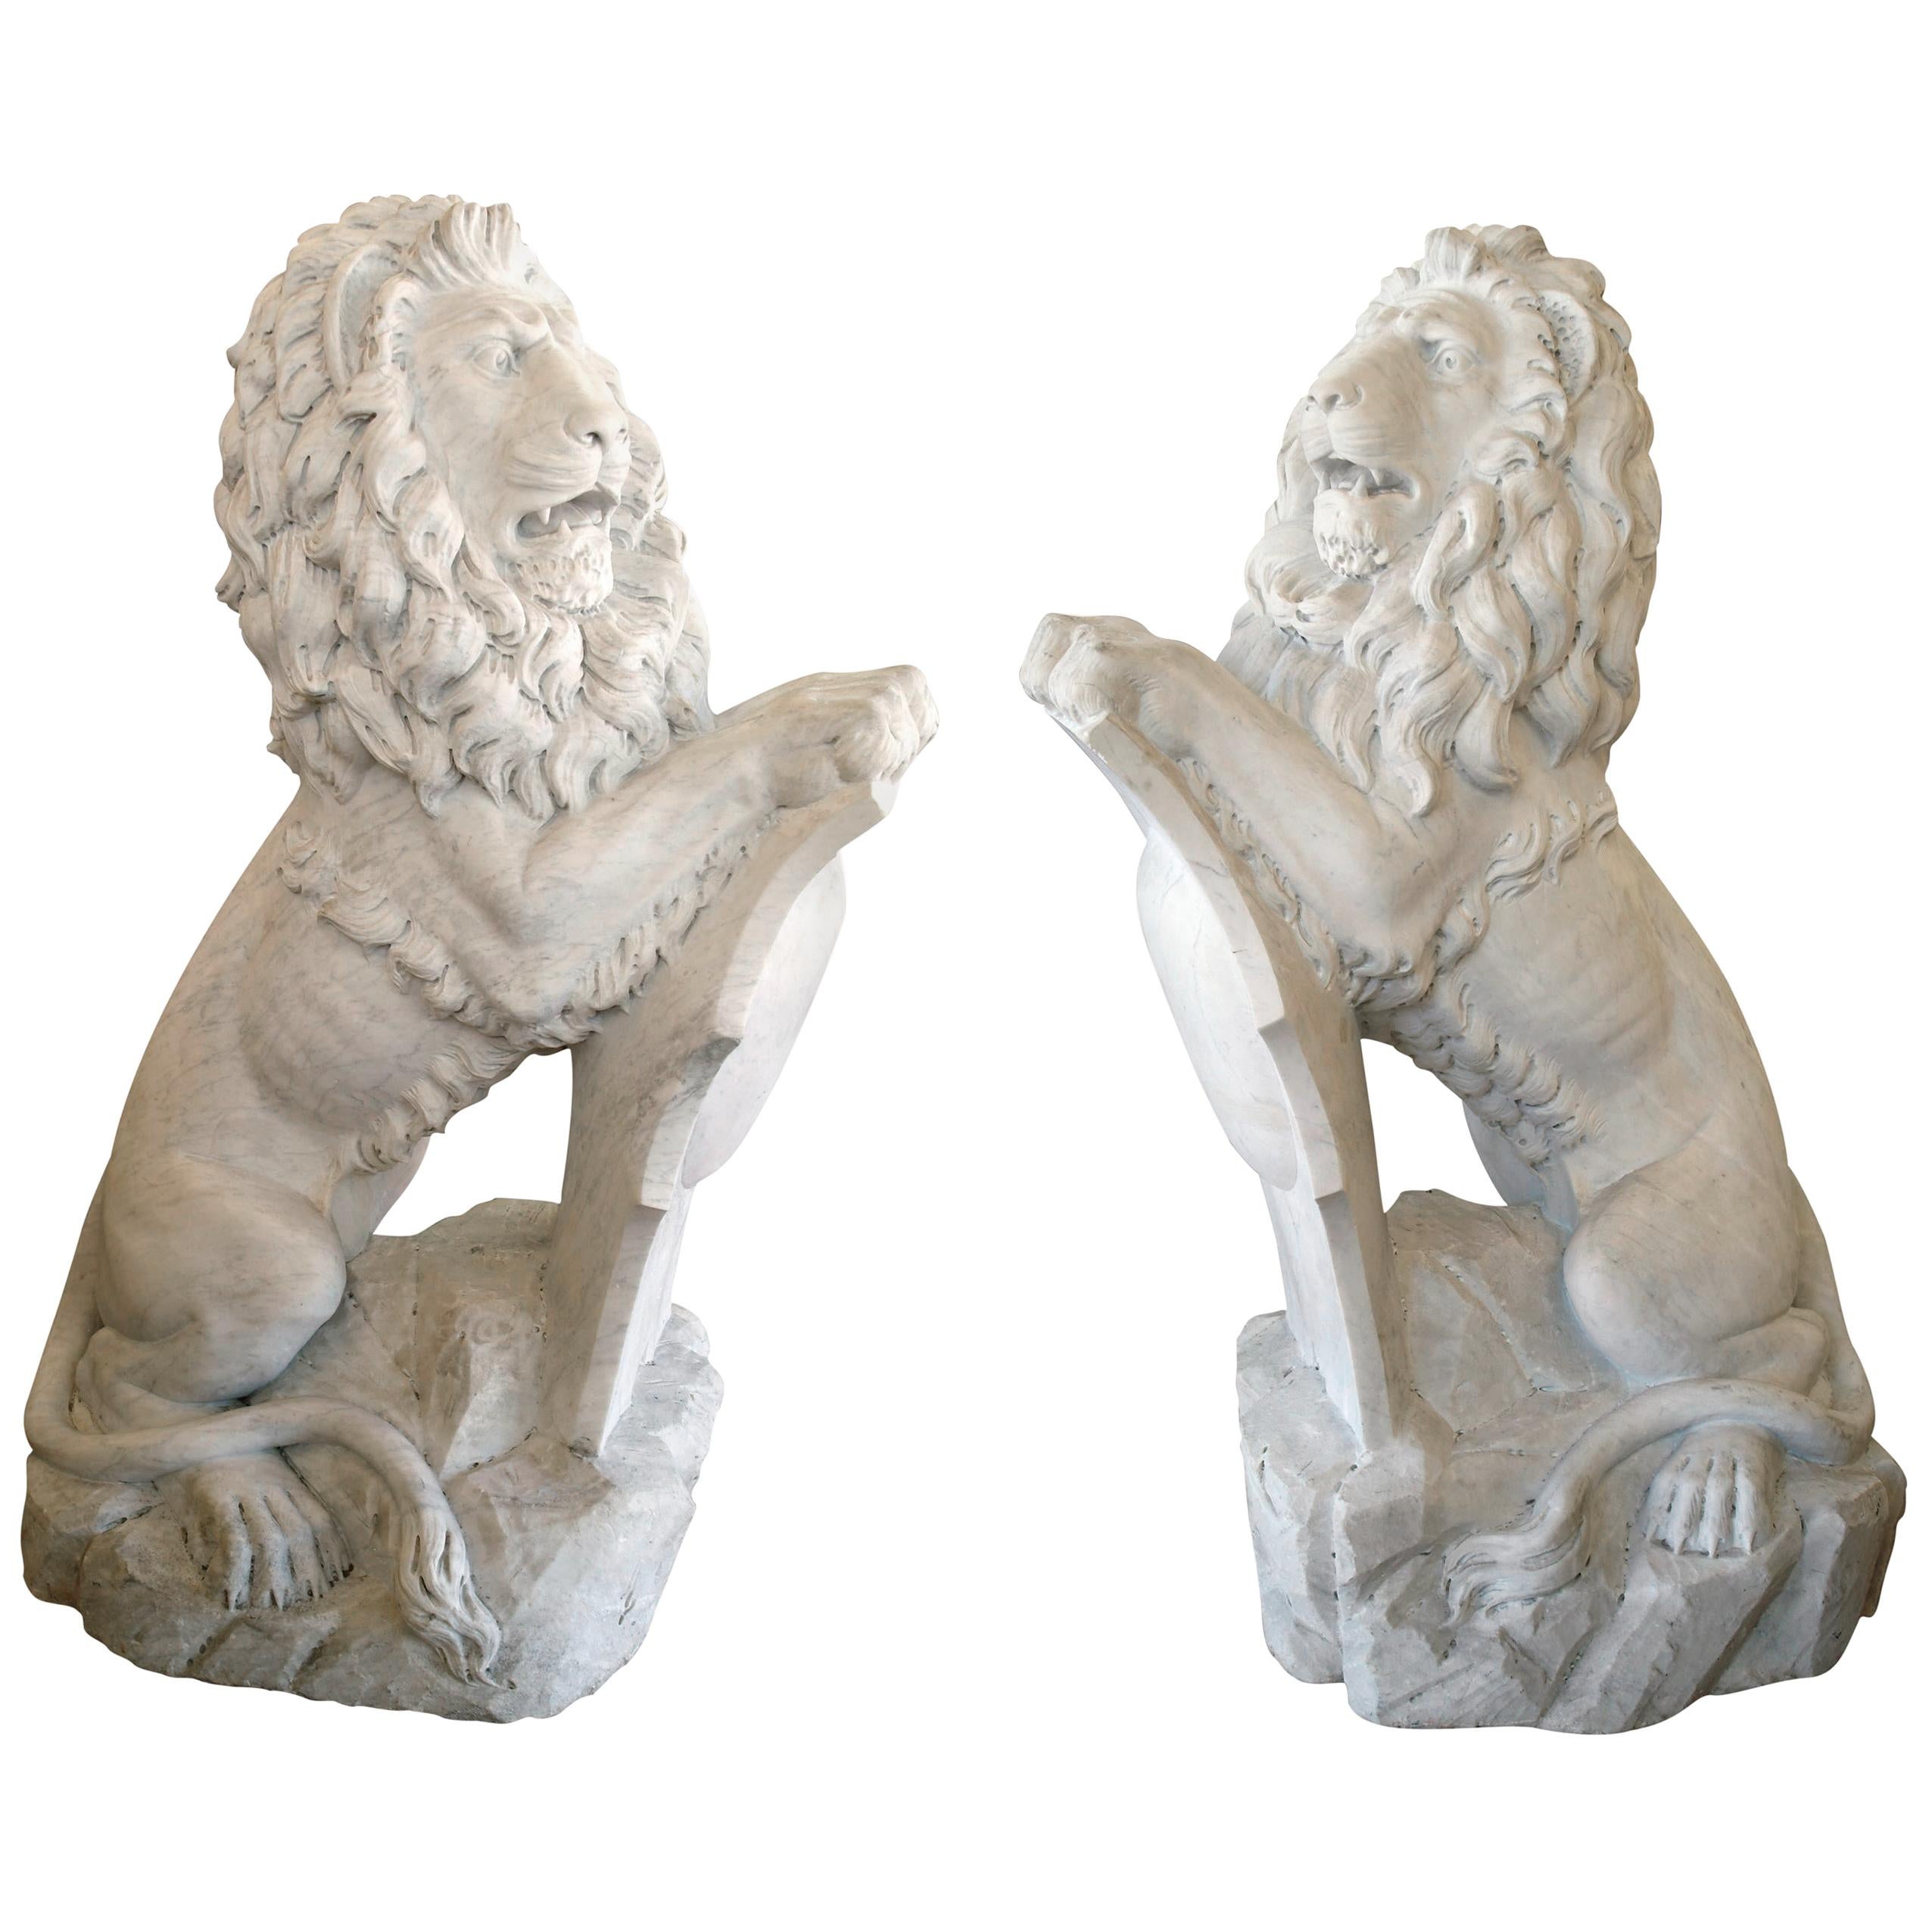 Pair of Lifesize antique marble lions after Joseph Gott